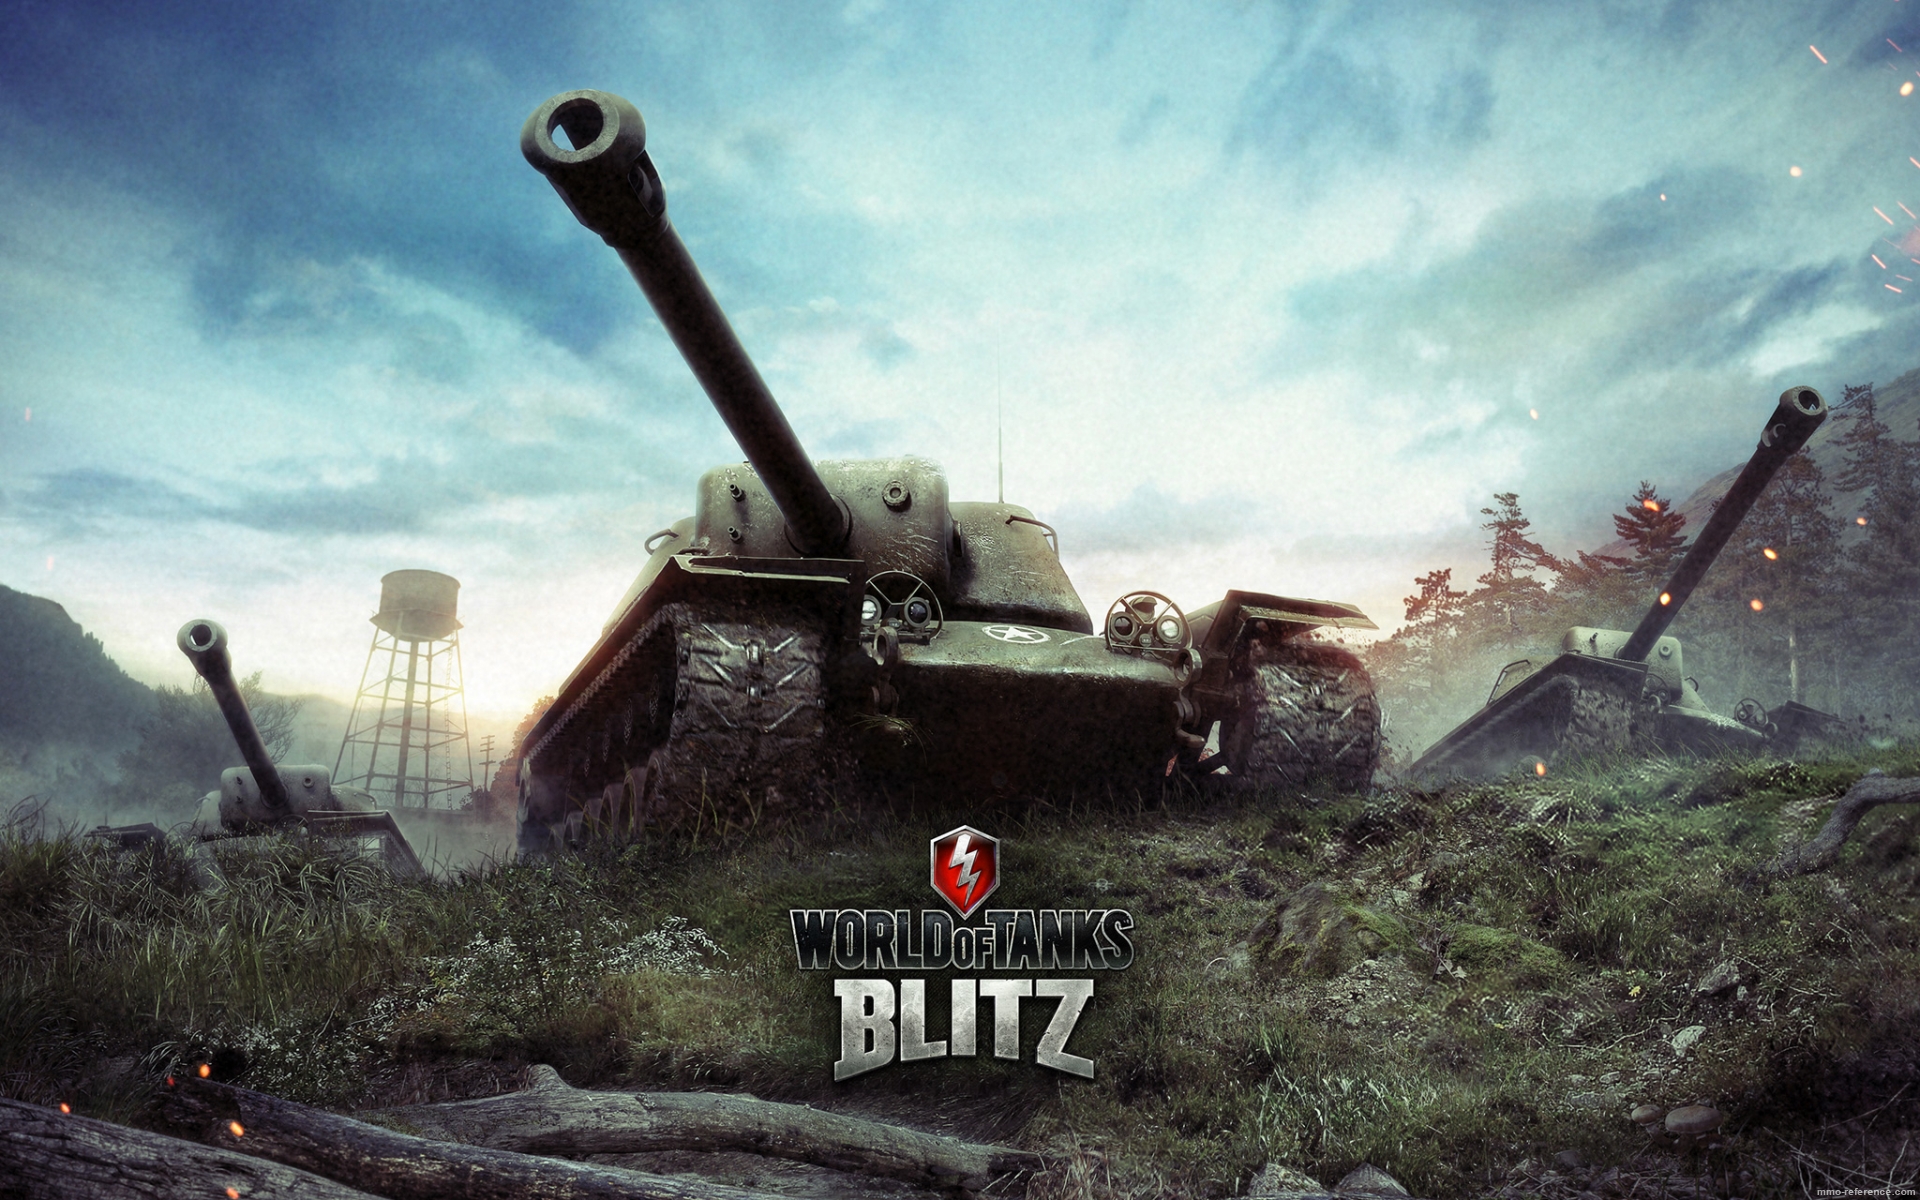 Wallpapers de World of Tanks Blitz - 10 fonds d’écran